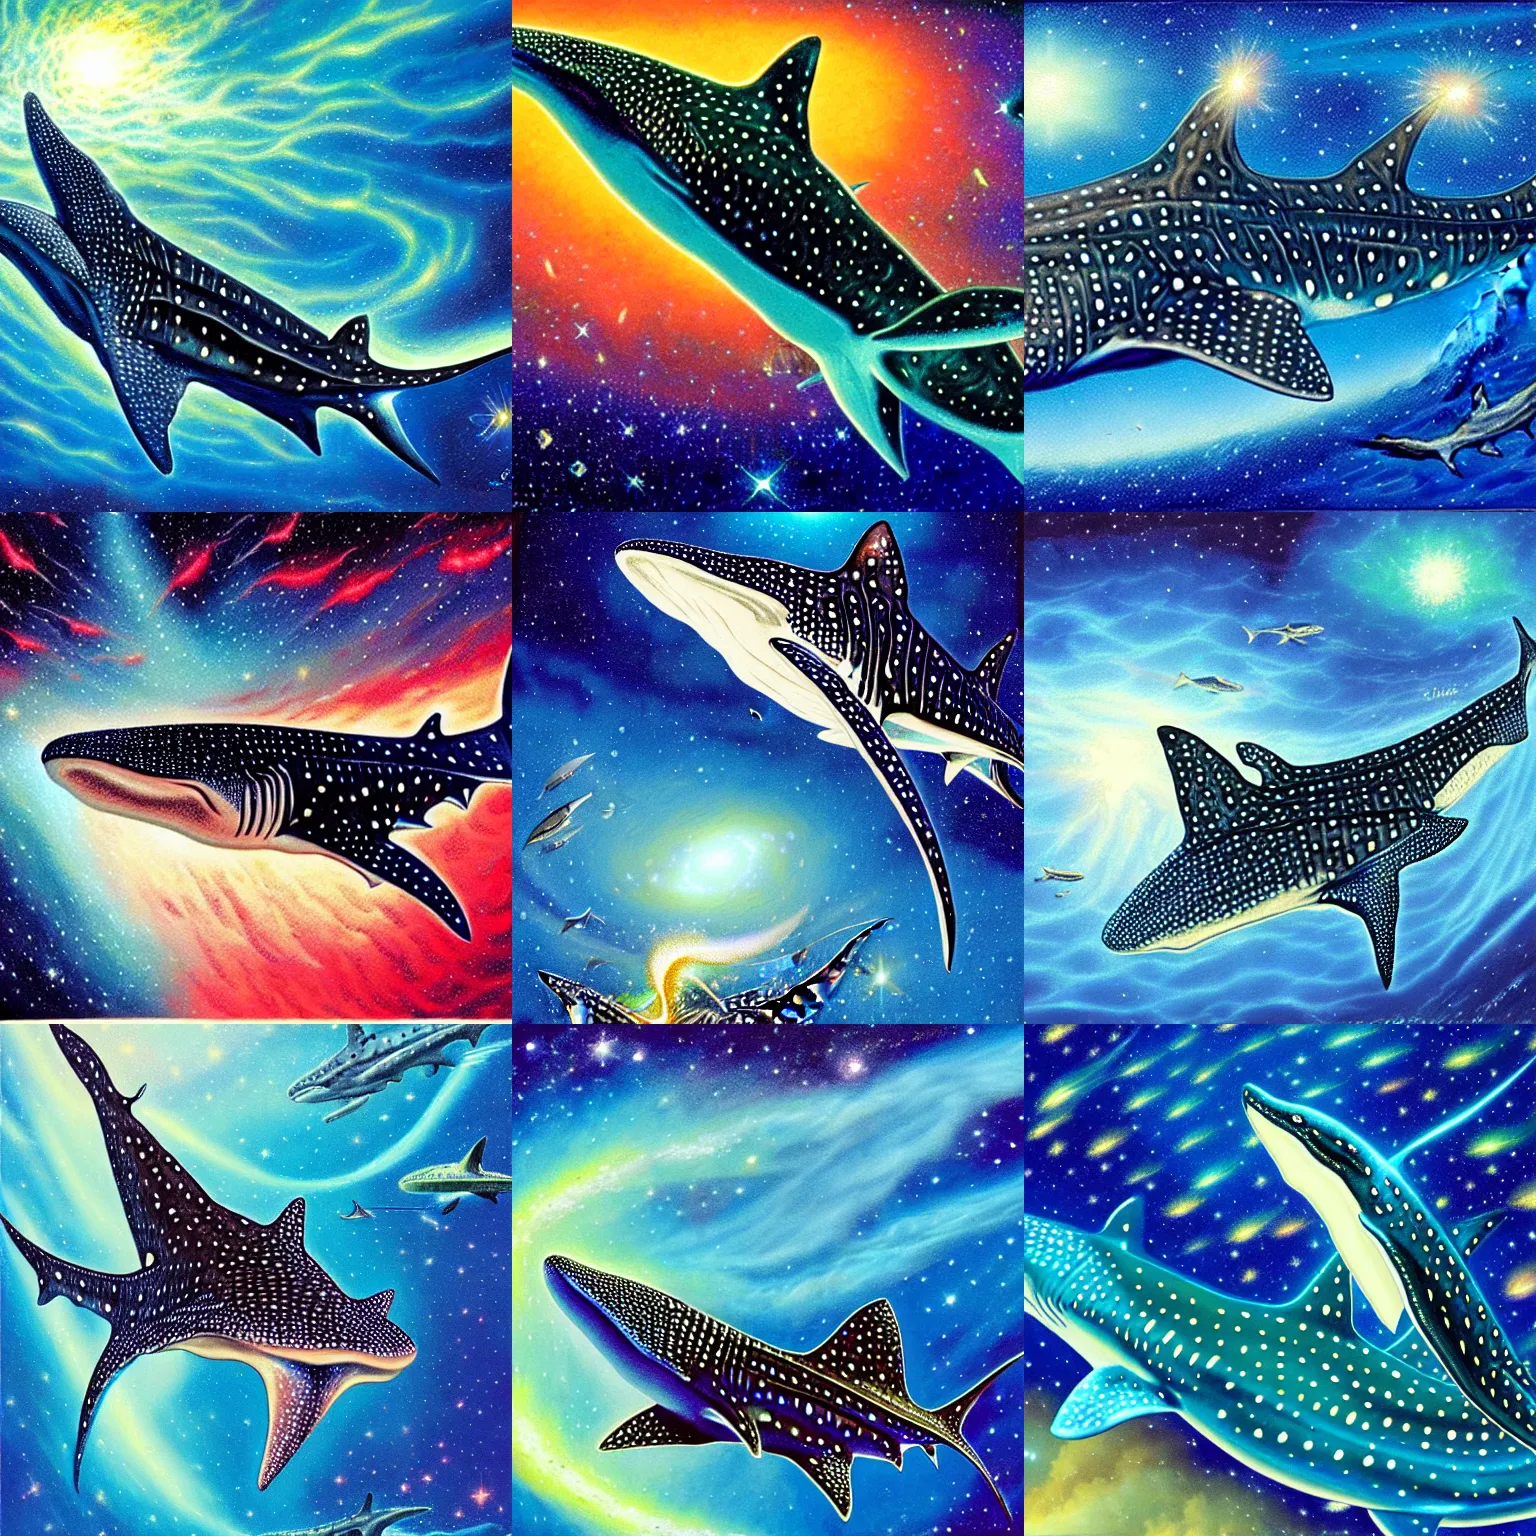 Prompt: finely detailed gouache painting of a whale shark, swirling luminous nebula background, bob eggleton, ultra detailed, gouache illustration of whale - shark foreground, colorful nebula background, sharp focus